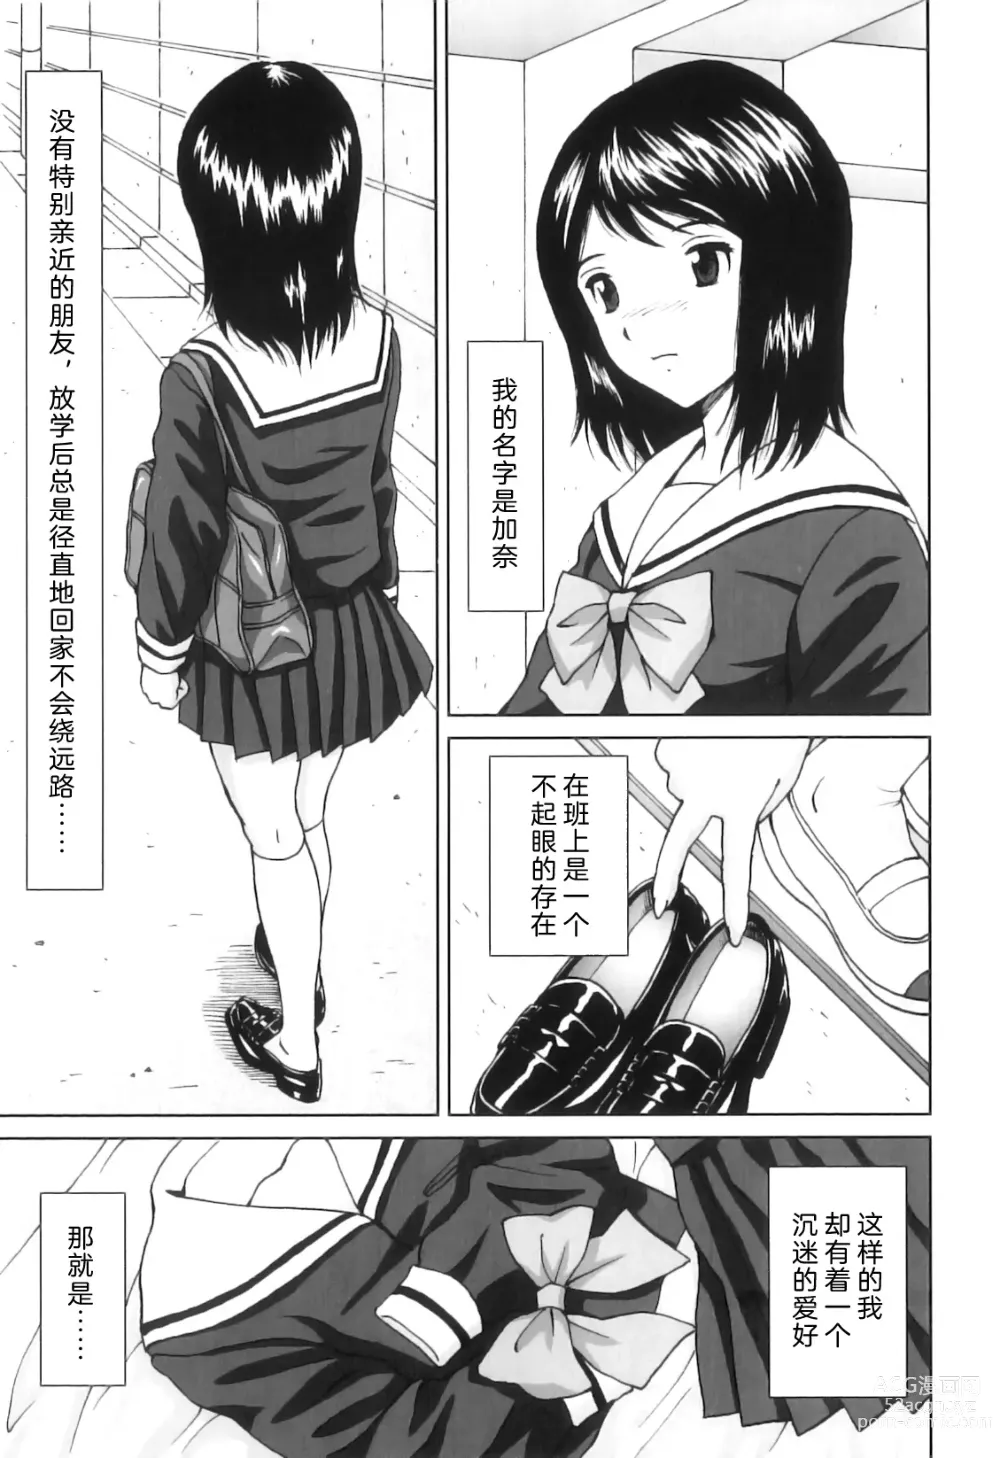 Page 12 of manga FutaSuki!